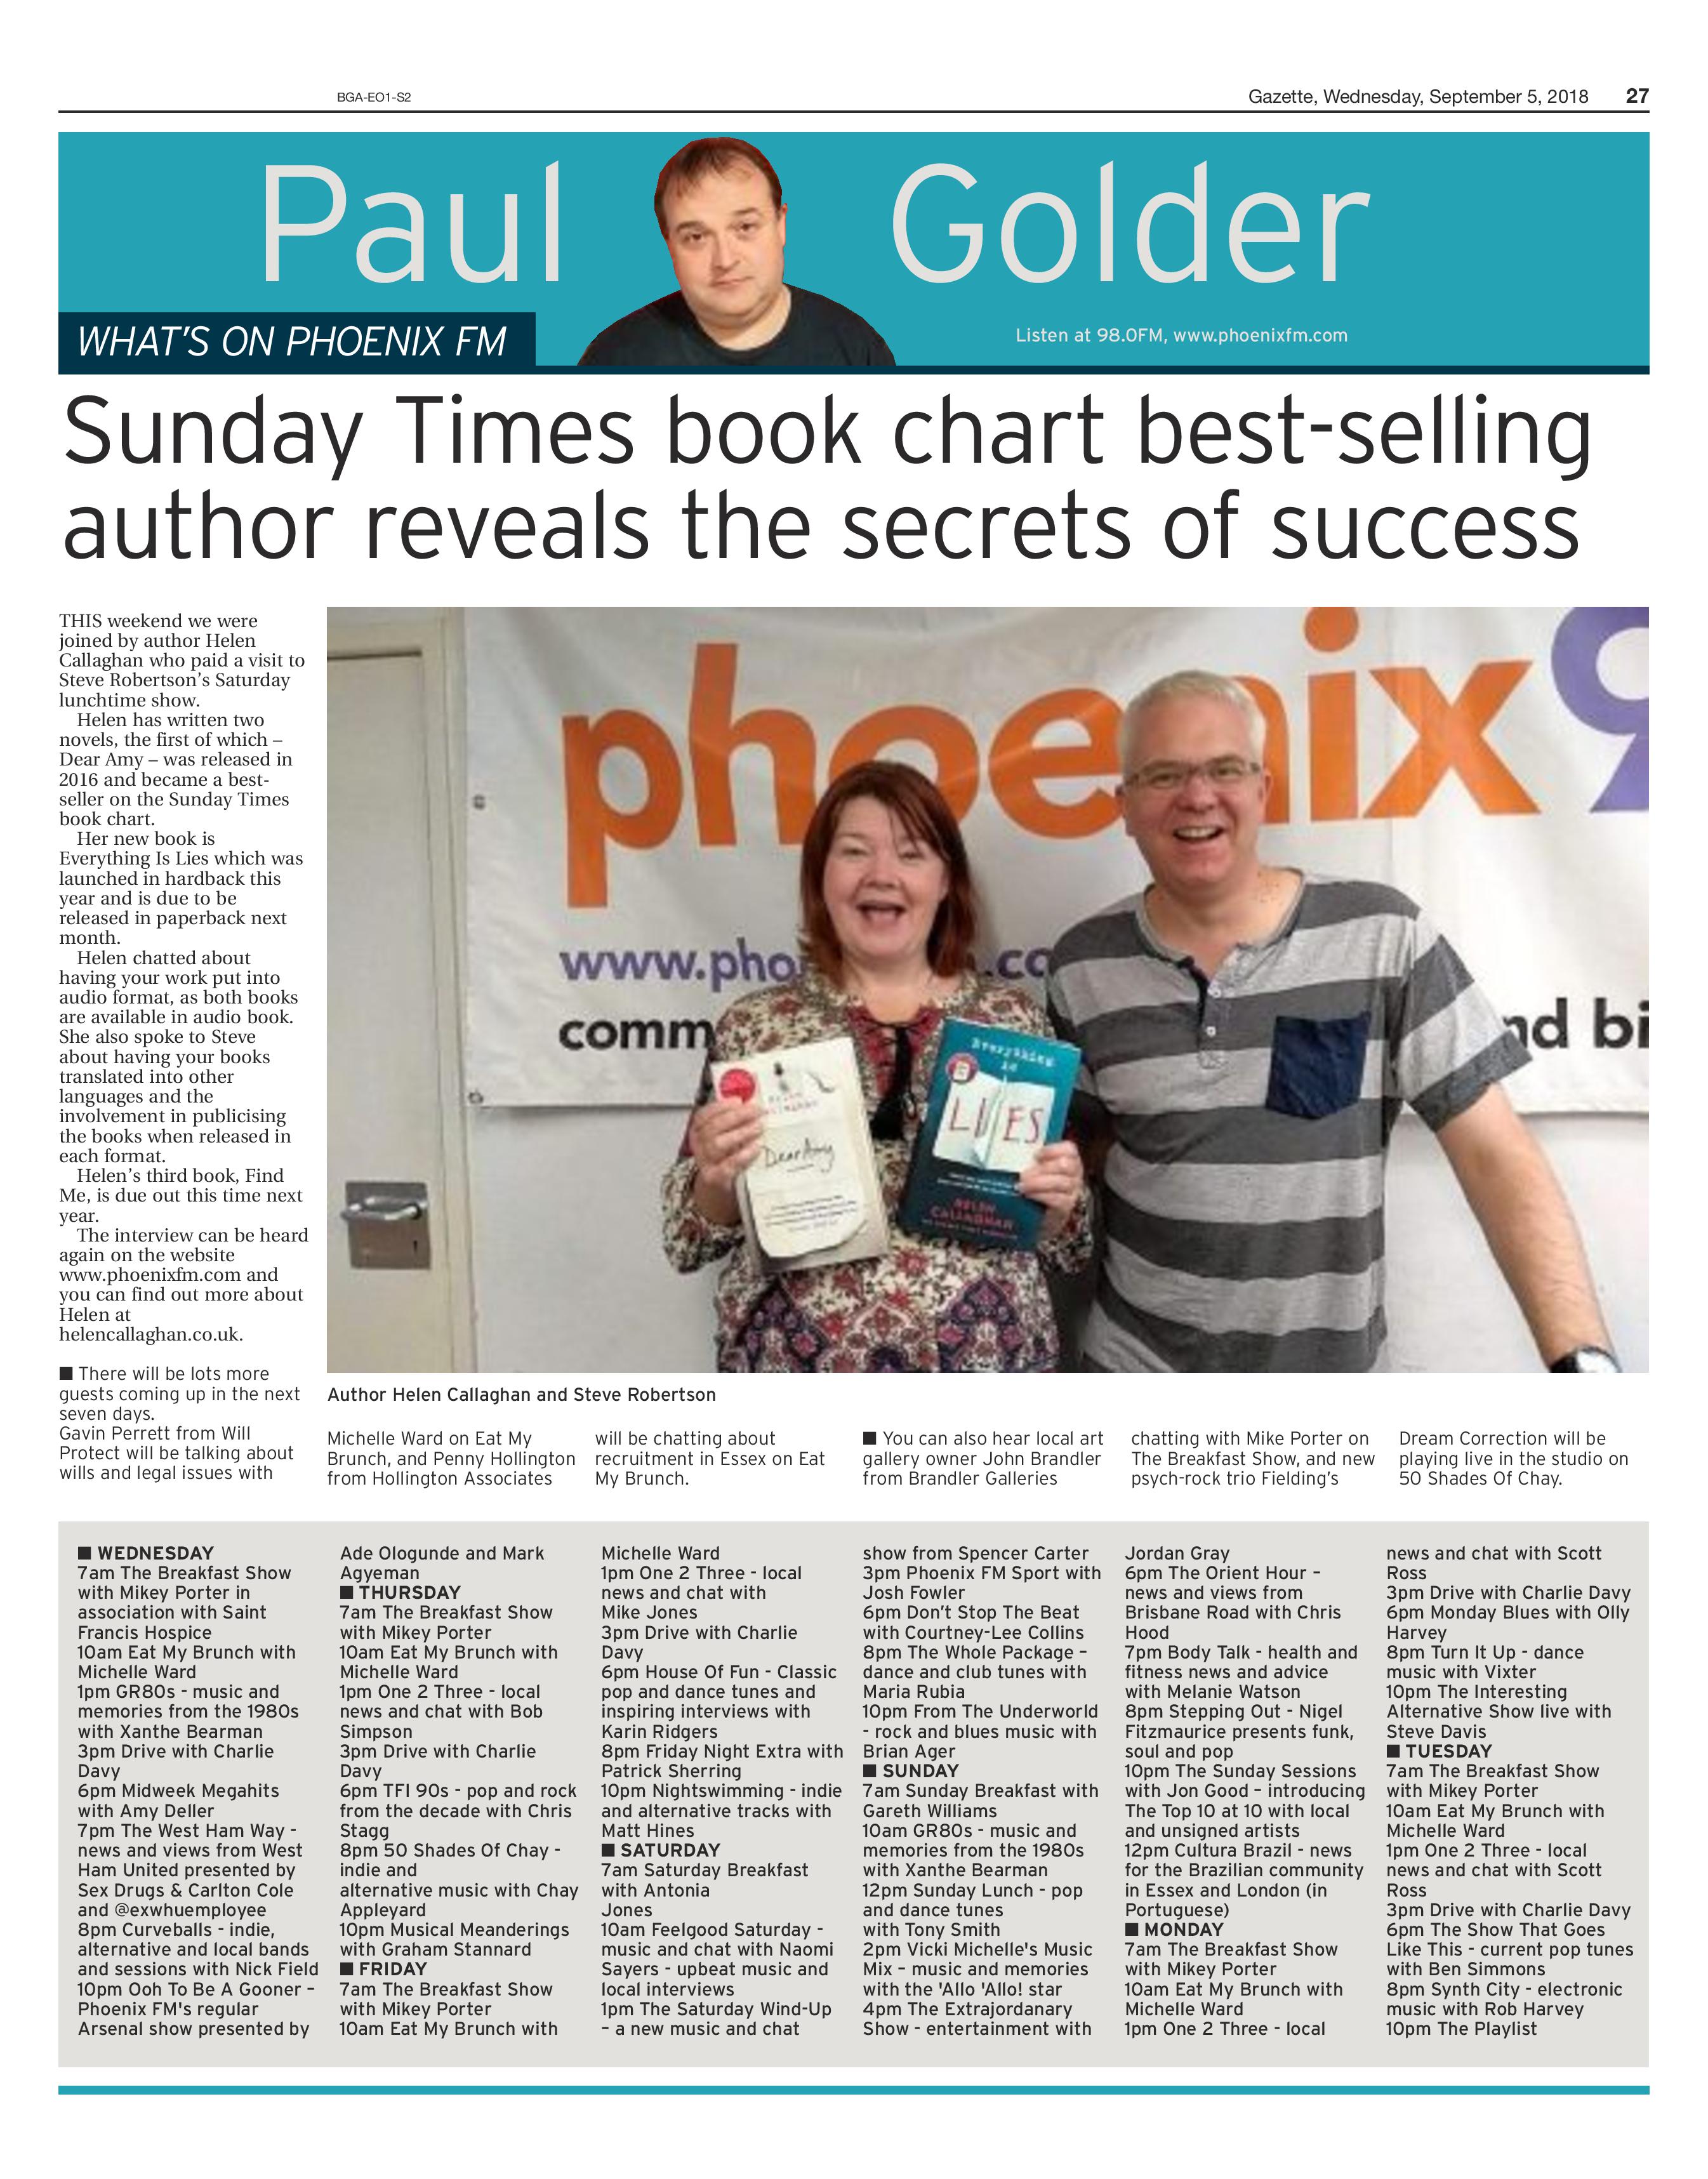 Sunday Times book chart bestselling author reveals the secrets of success Phoenix FM